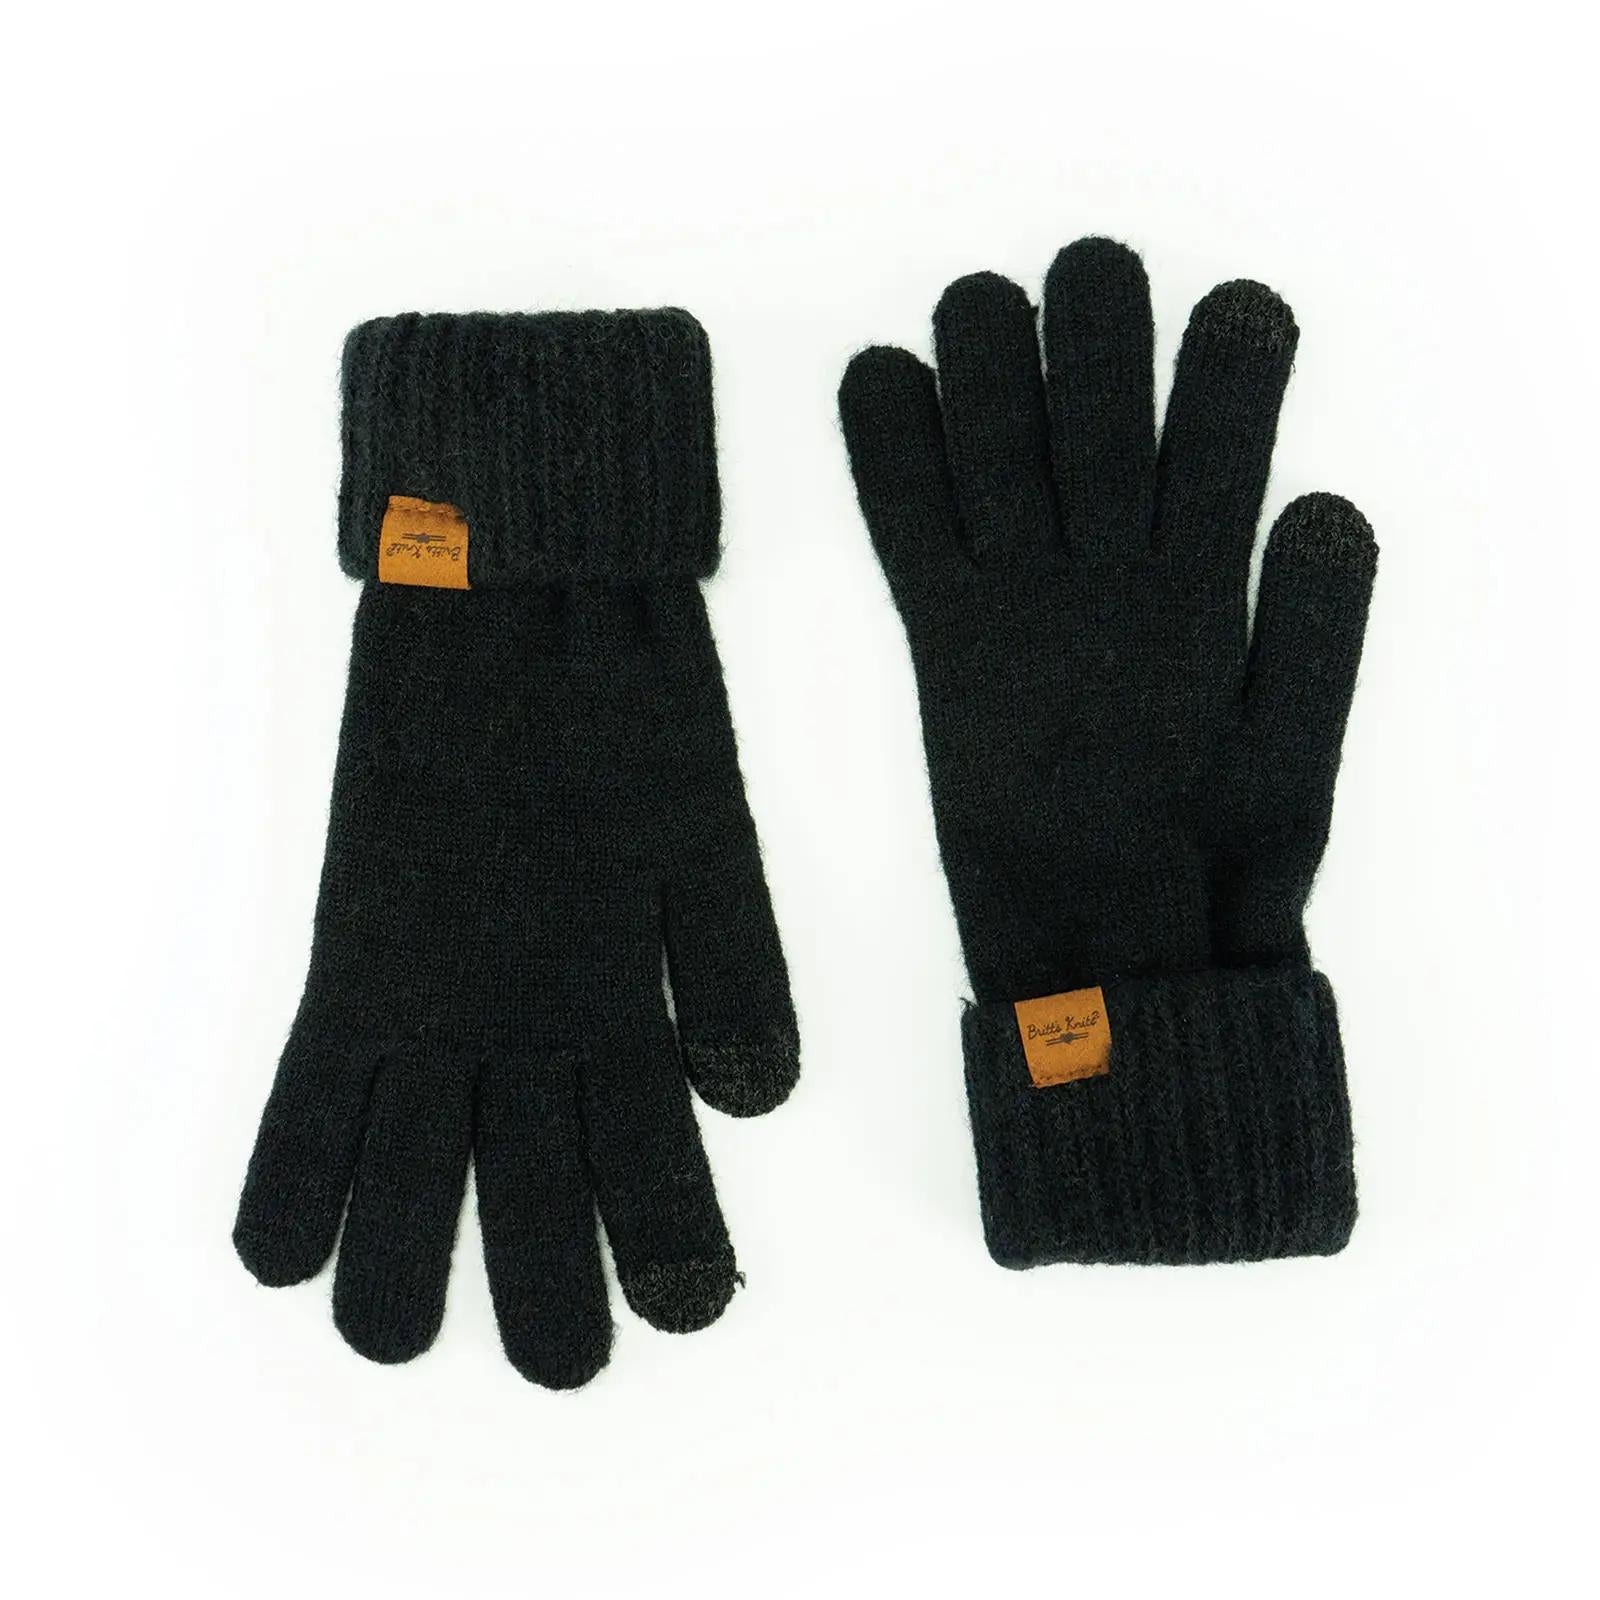 Mainstay Cuffed Gloves Black